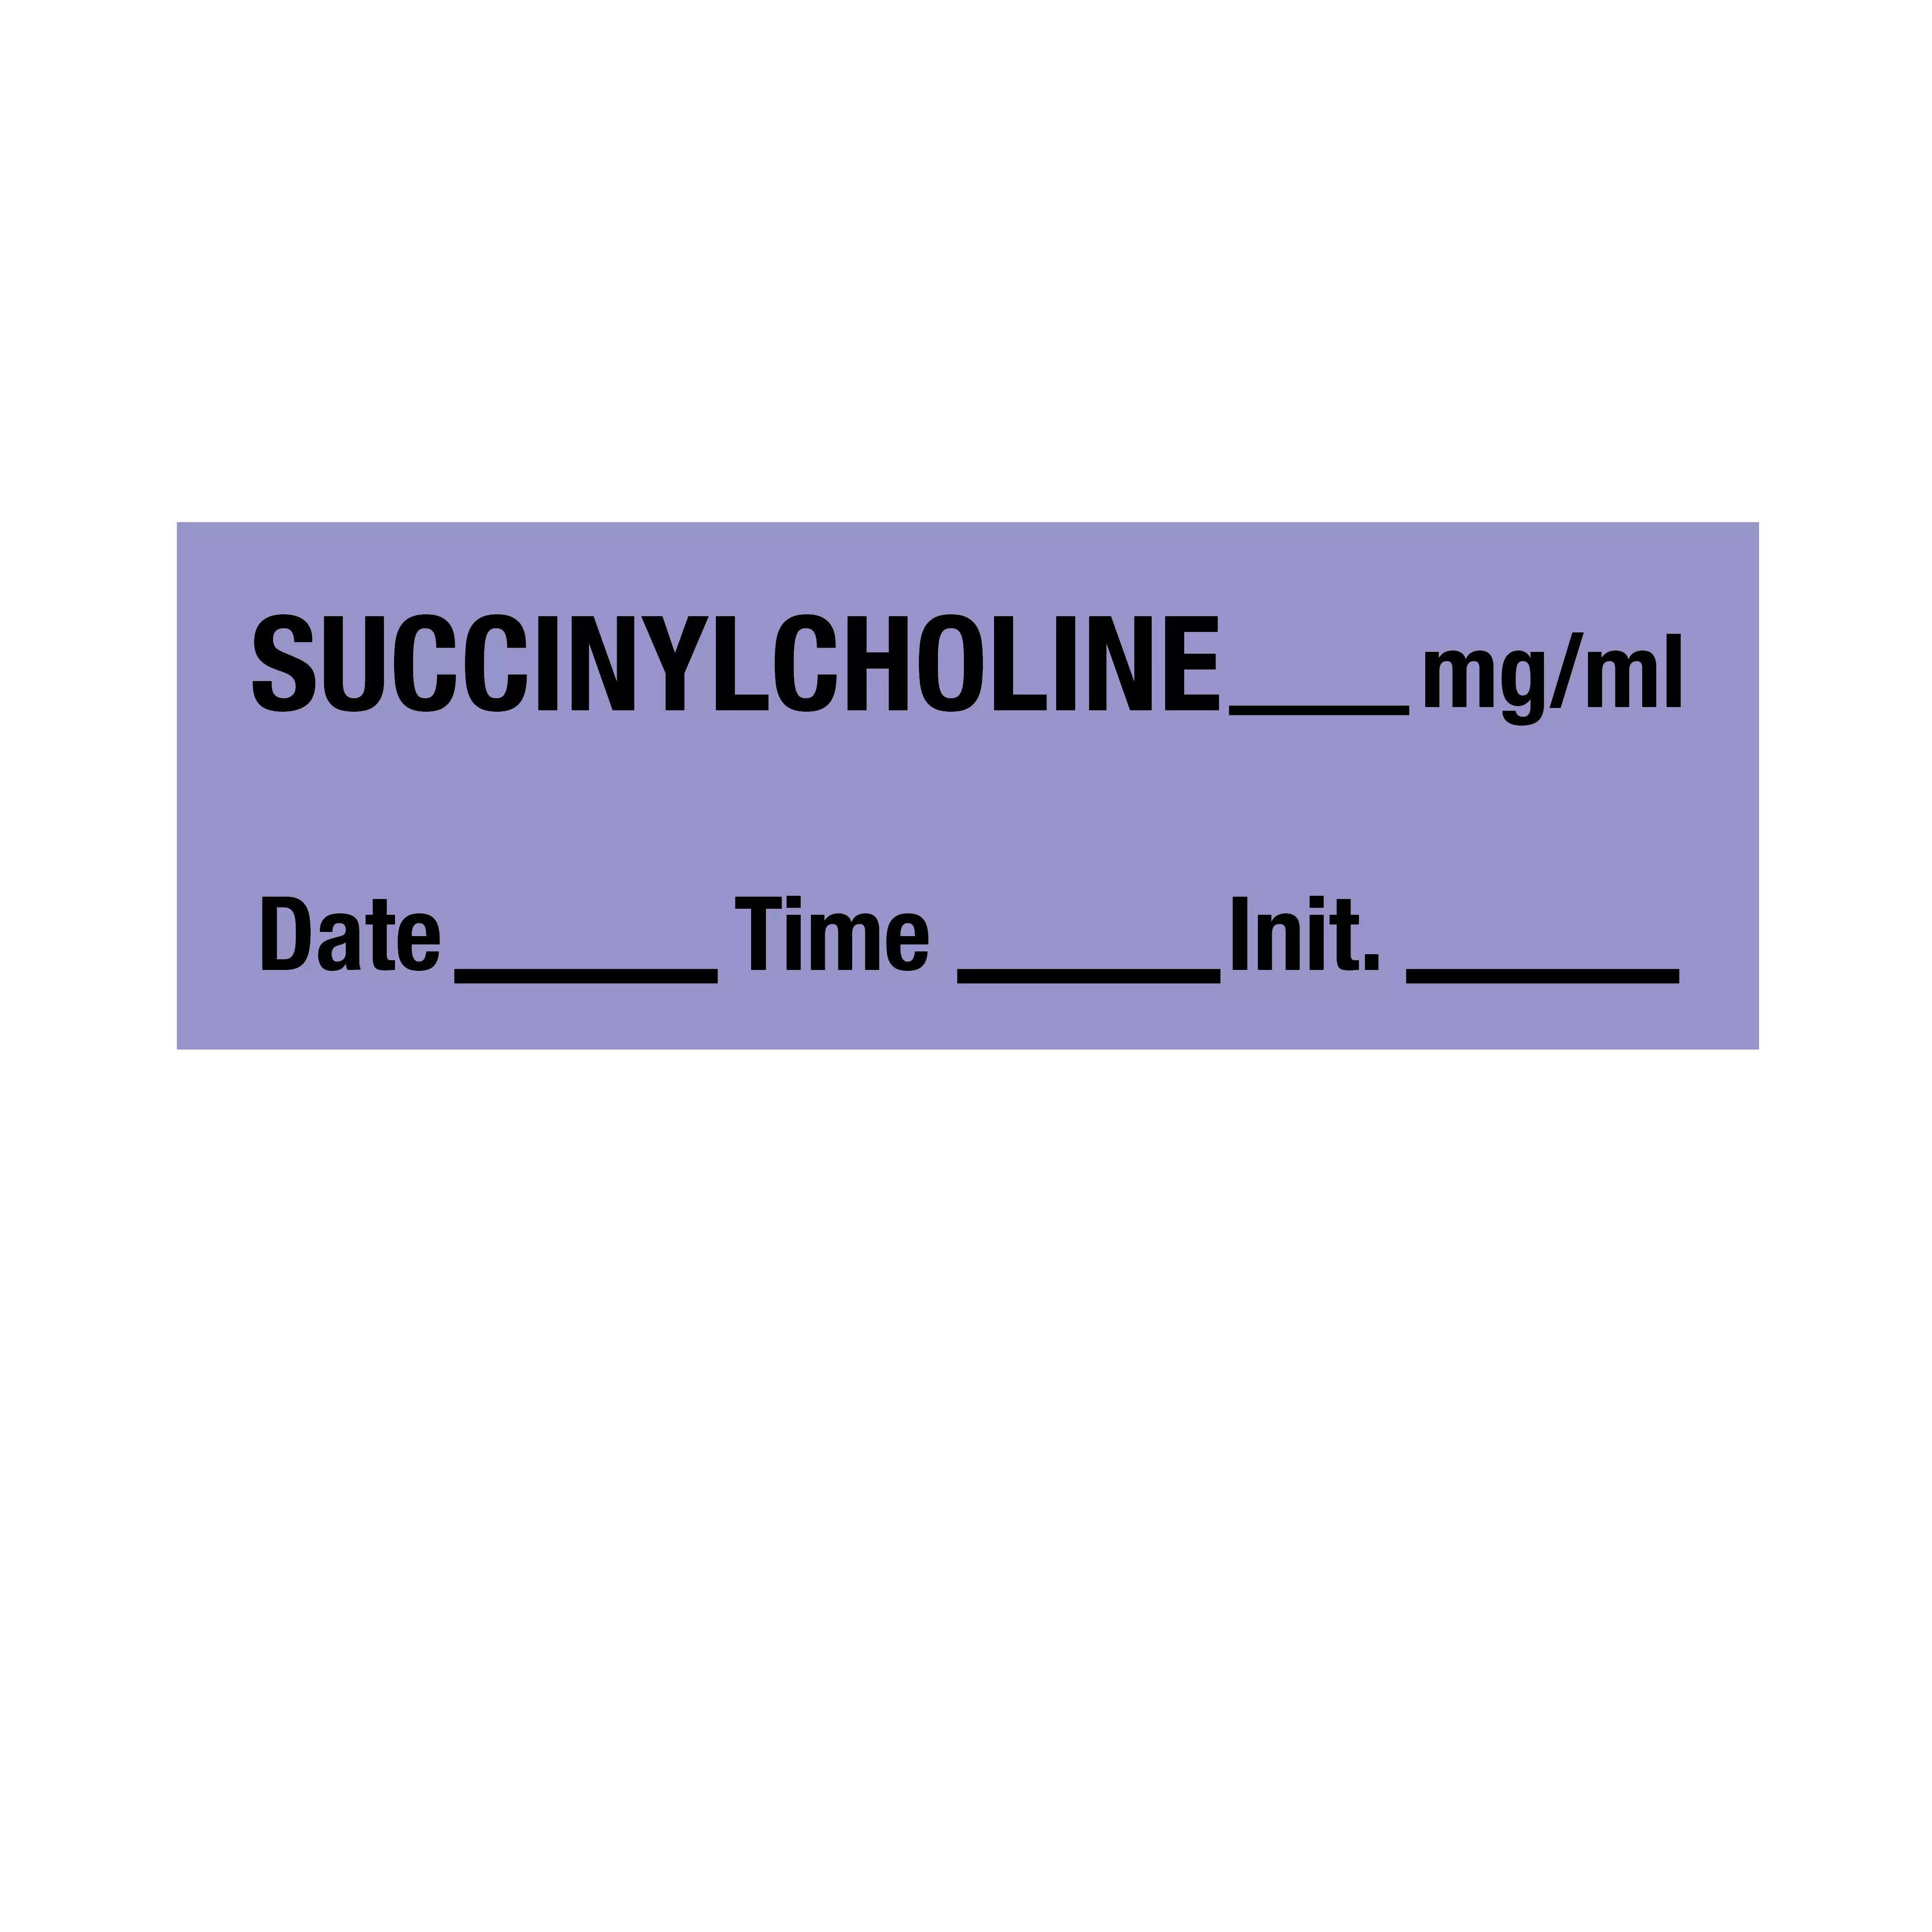 Tape, Succinylcholine